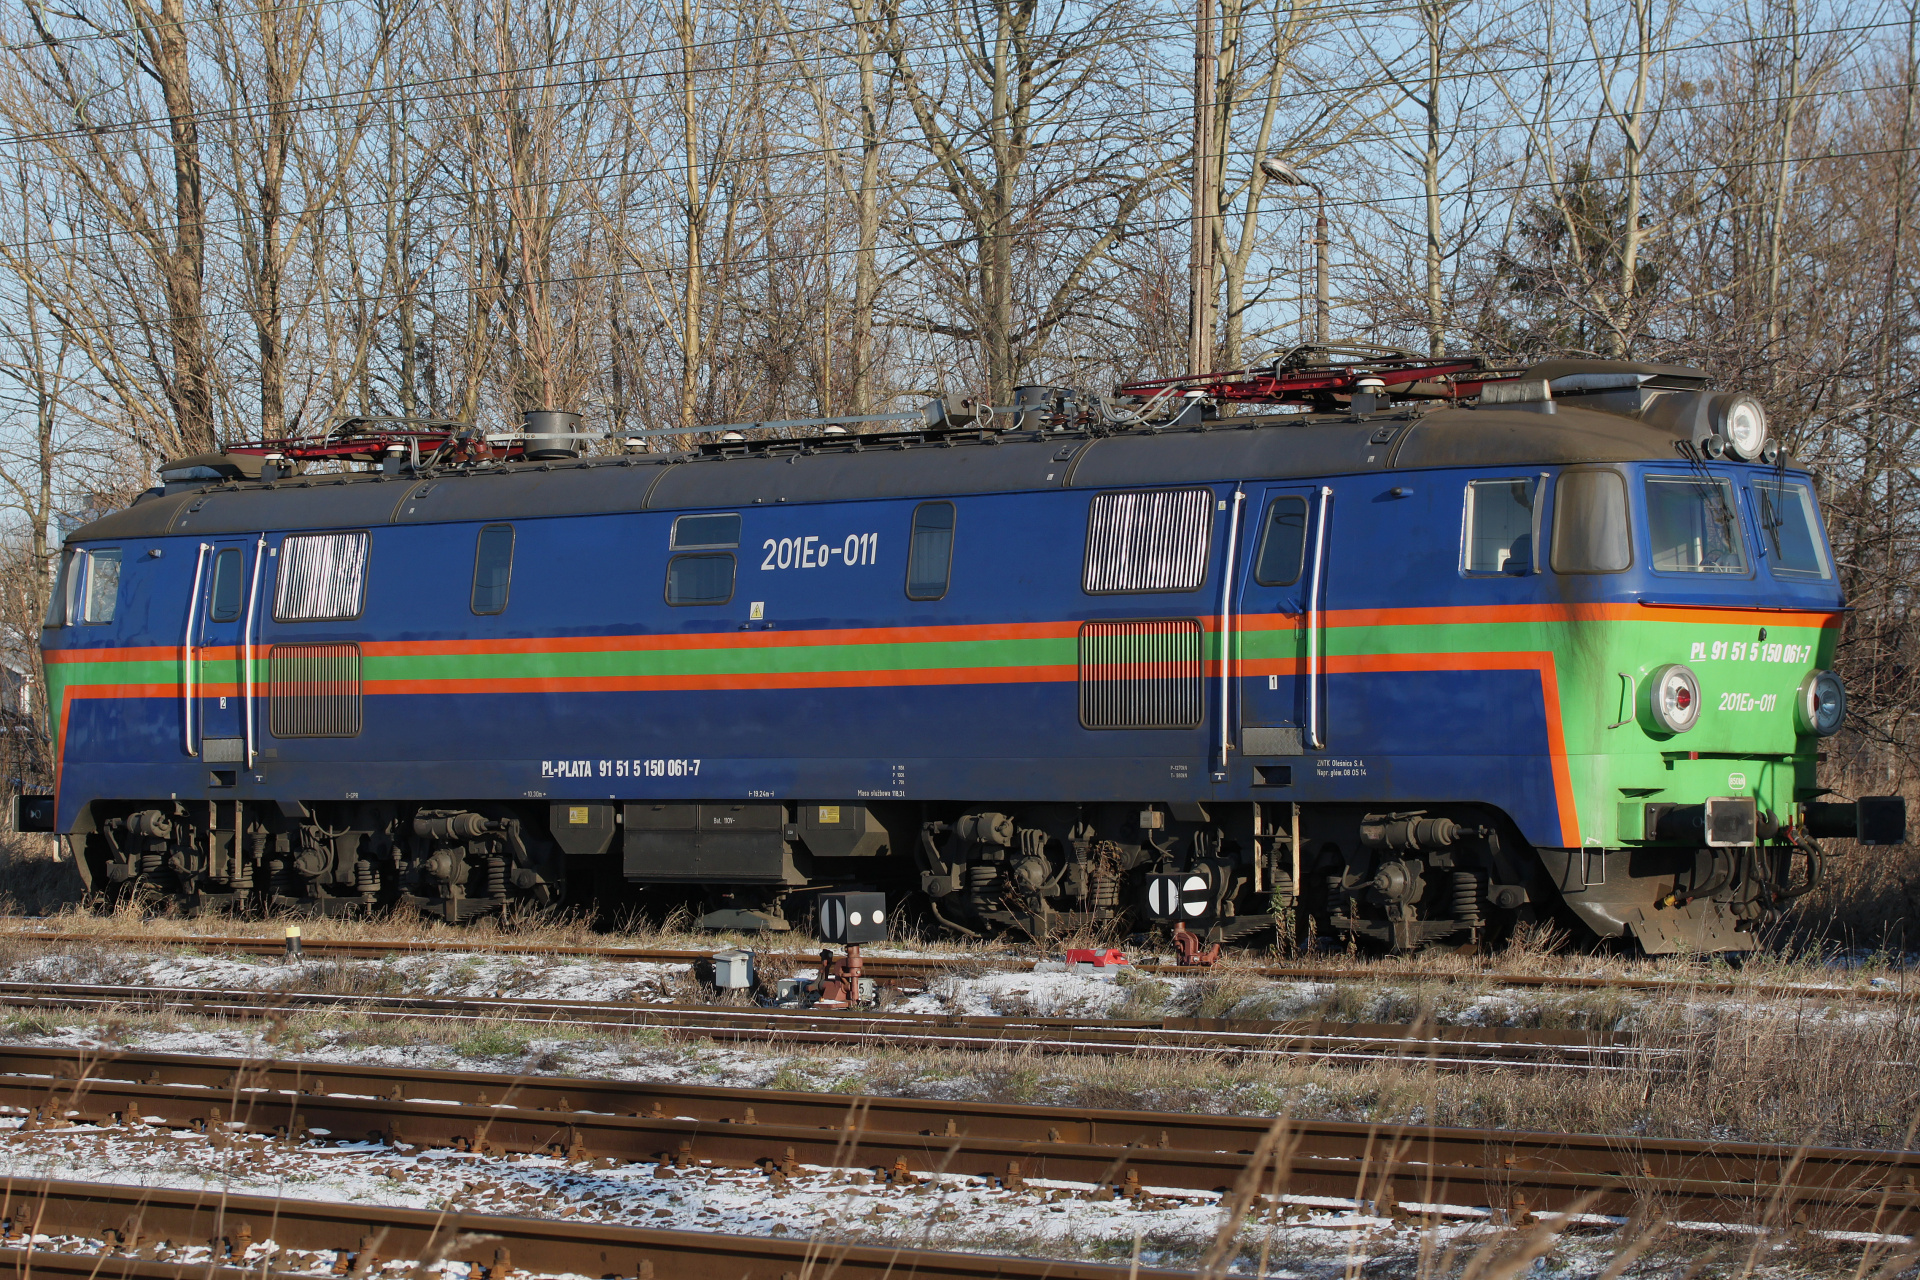 201Eo-011 (Vehicles » Trains and Locomotives » Pafawag 201E)